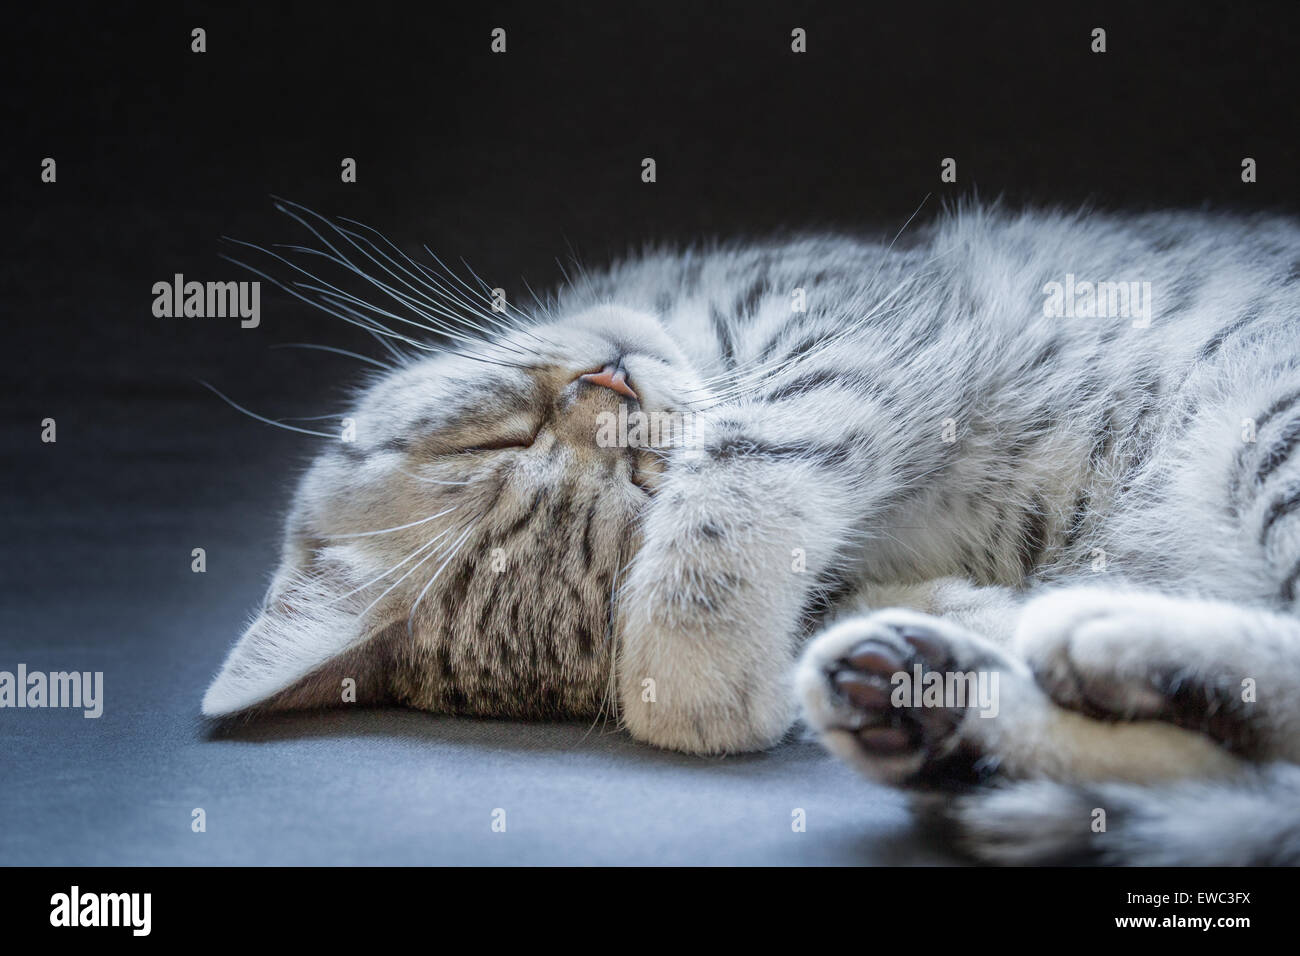 Joven negro plata gato atigrado mintiendo perezoso y somnoliento aislado sobre fondo negro gris Foto de stock